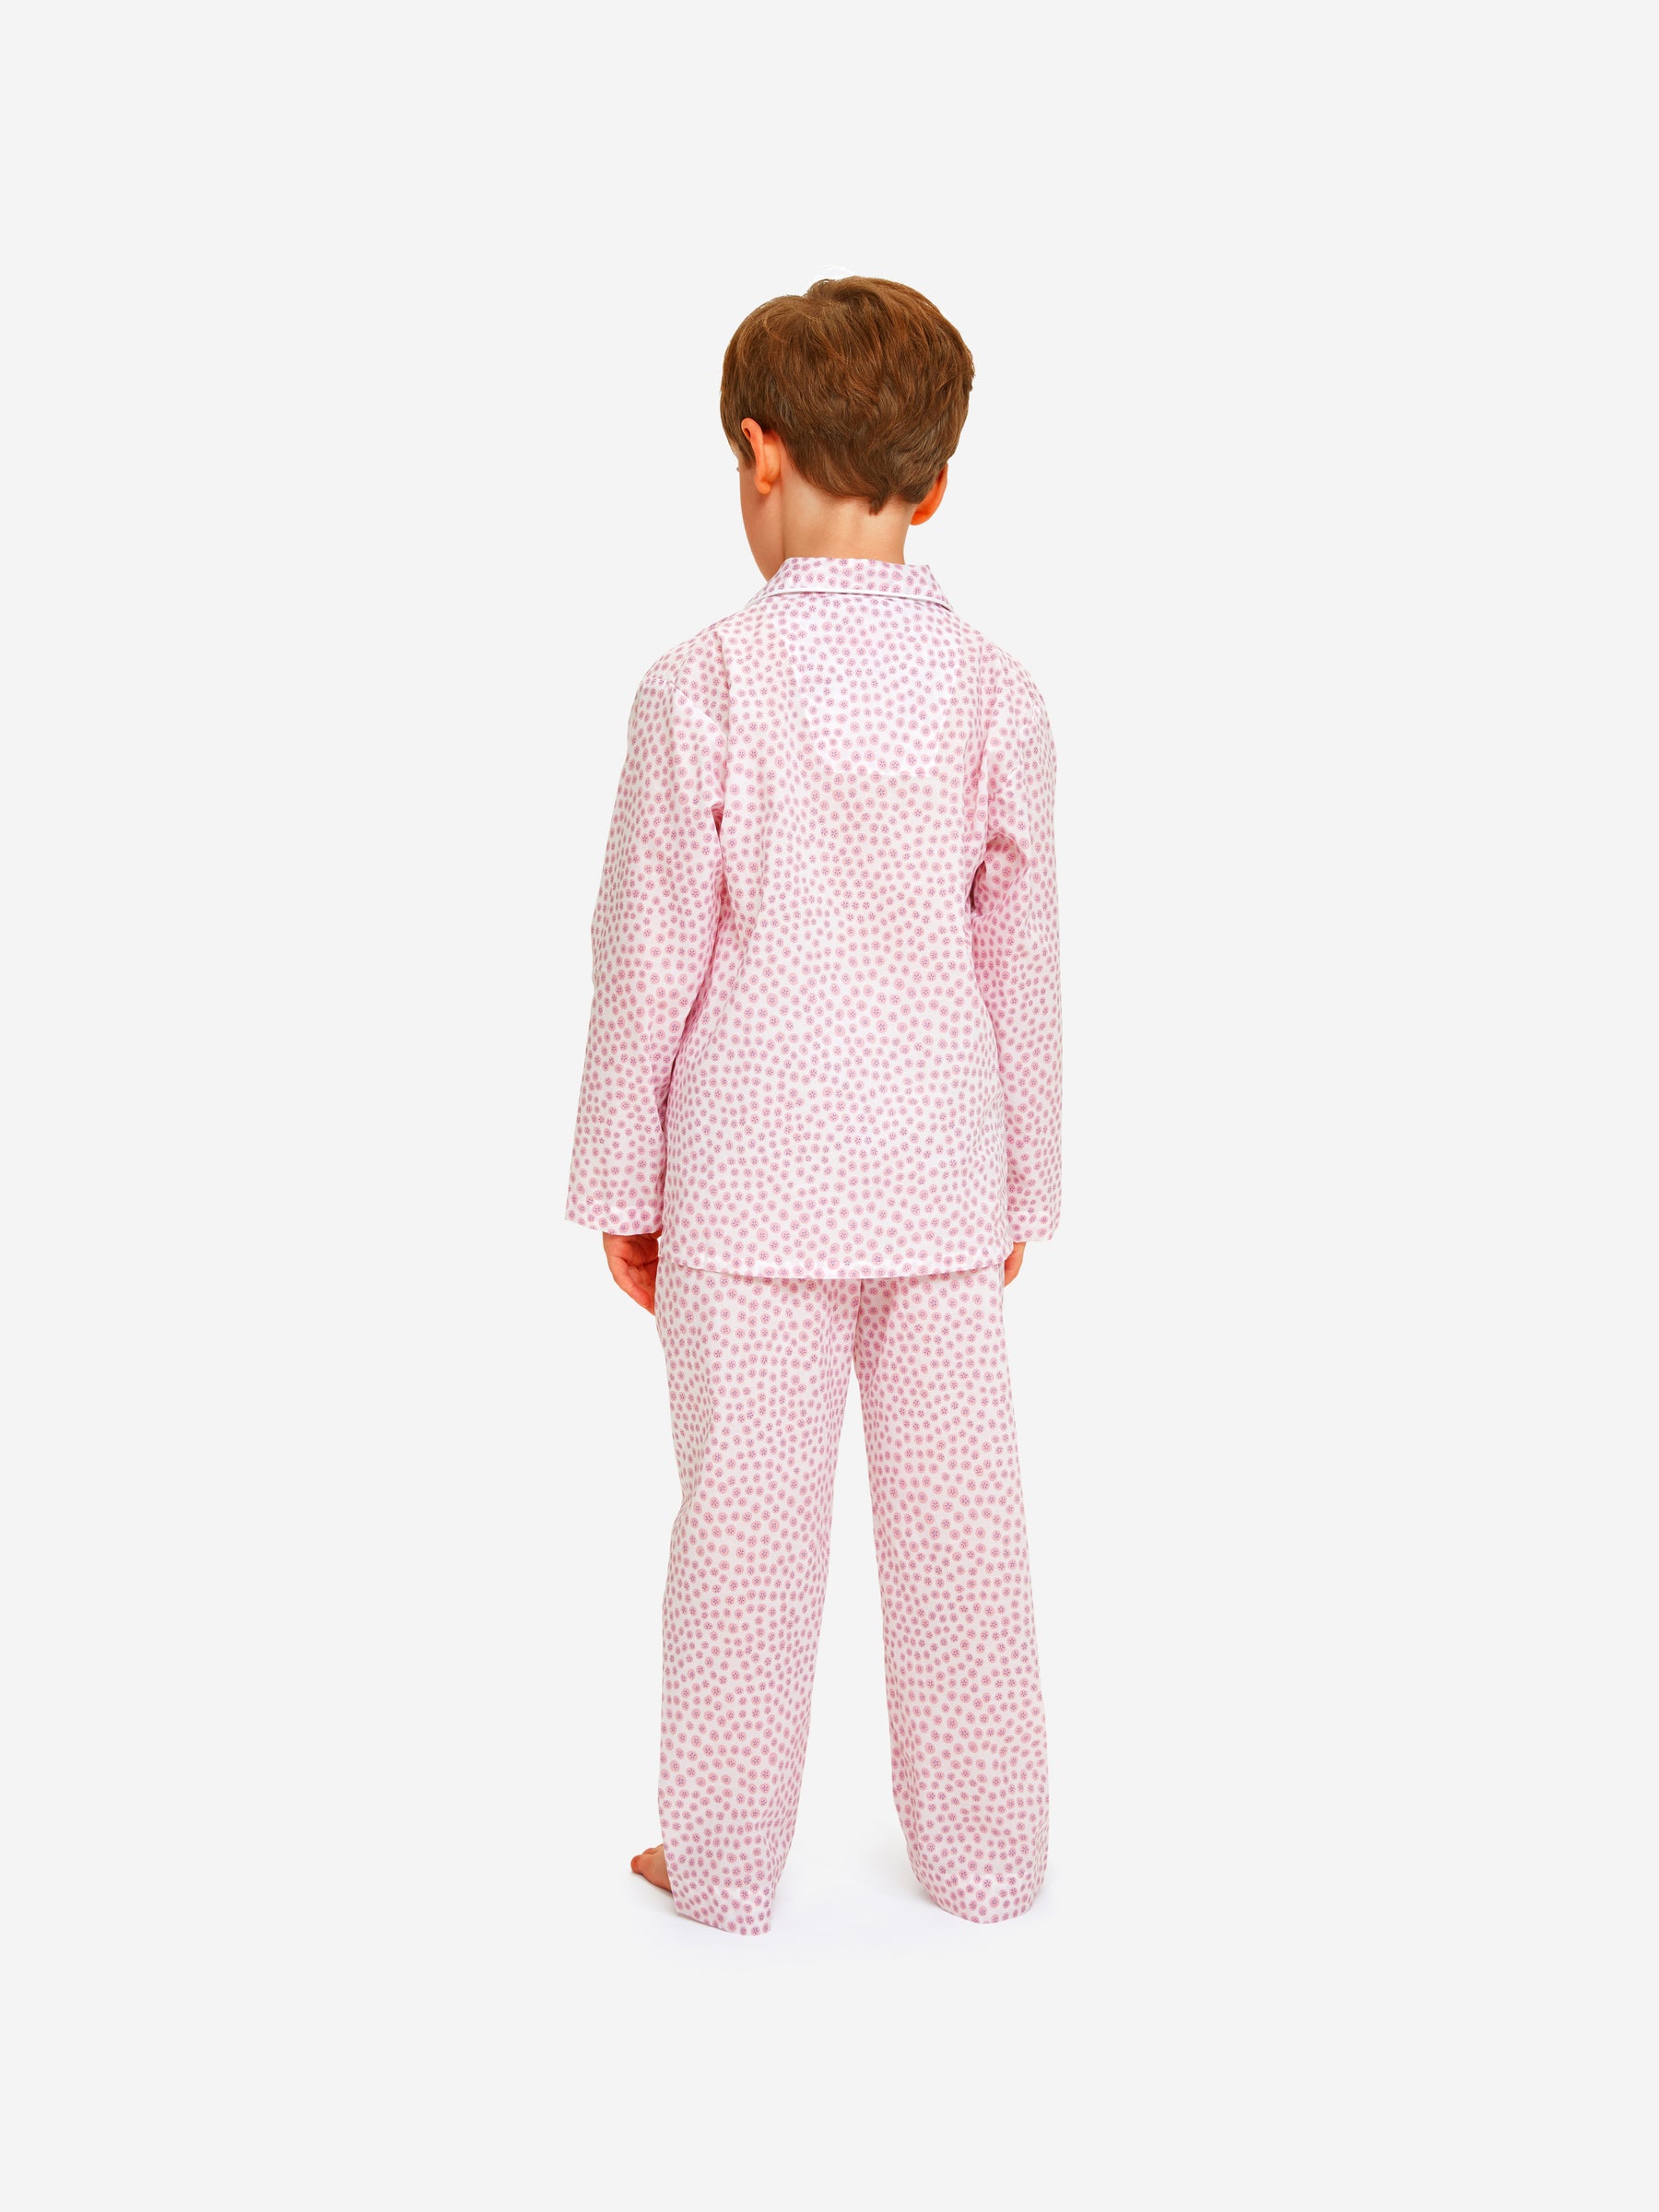 Kids' Pyjamas Nelson 88 Cotton Batiste White